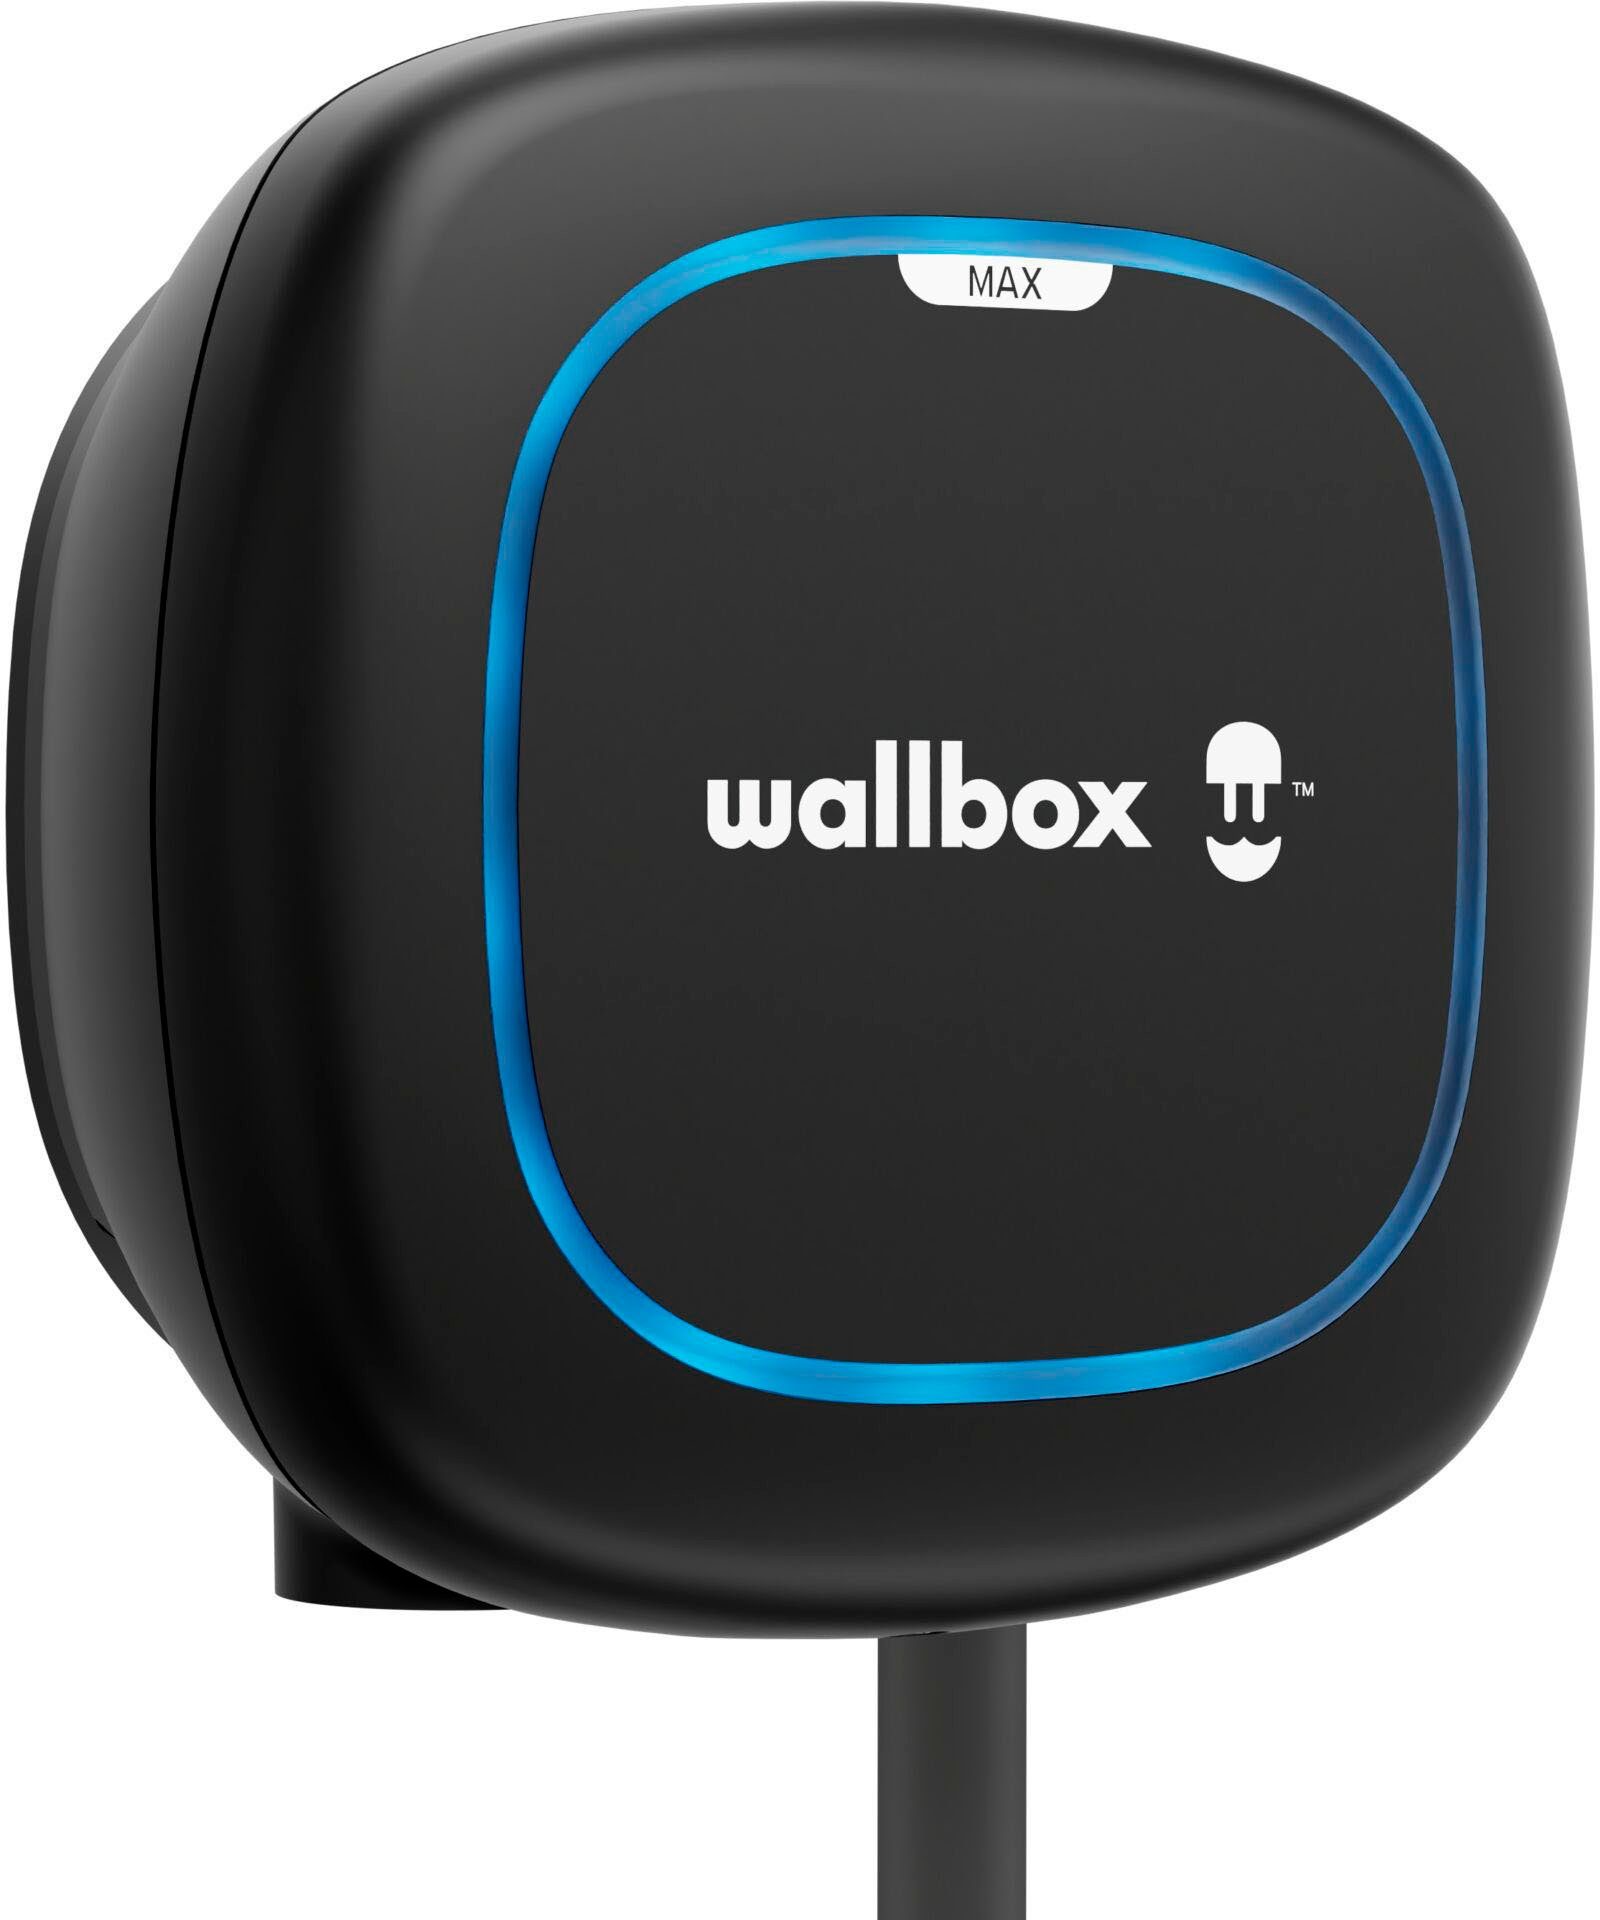 Wallbox Elektroauto-Ladestation Pulsar Max, 3-phasig, Max 22kW,7 m Kabel, schwarz